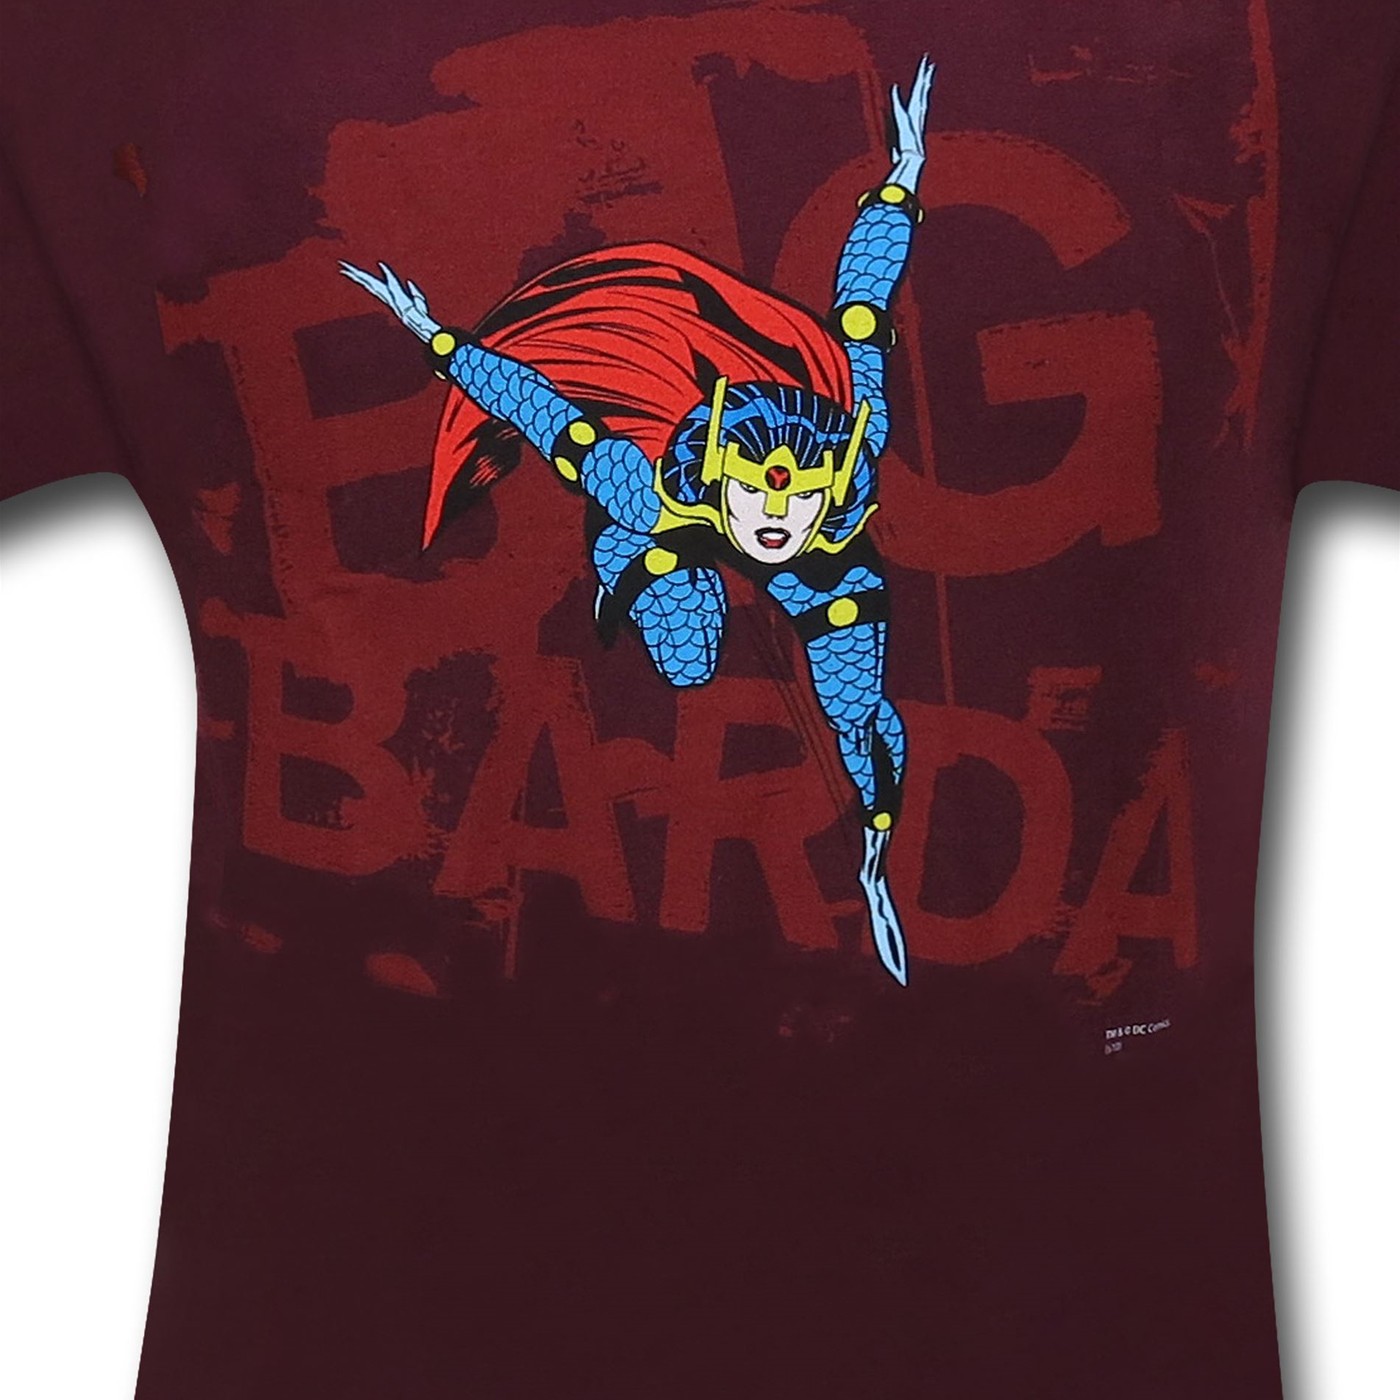 Big Barda by Jack Kirby T-Shirt